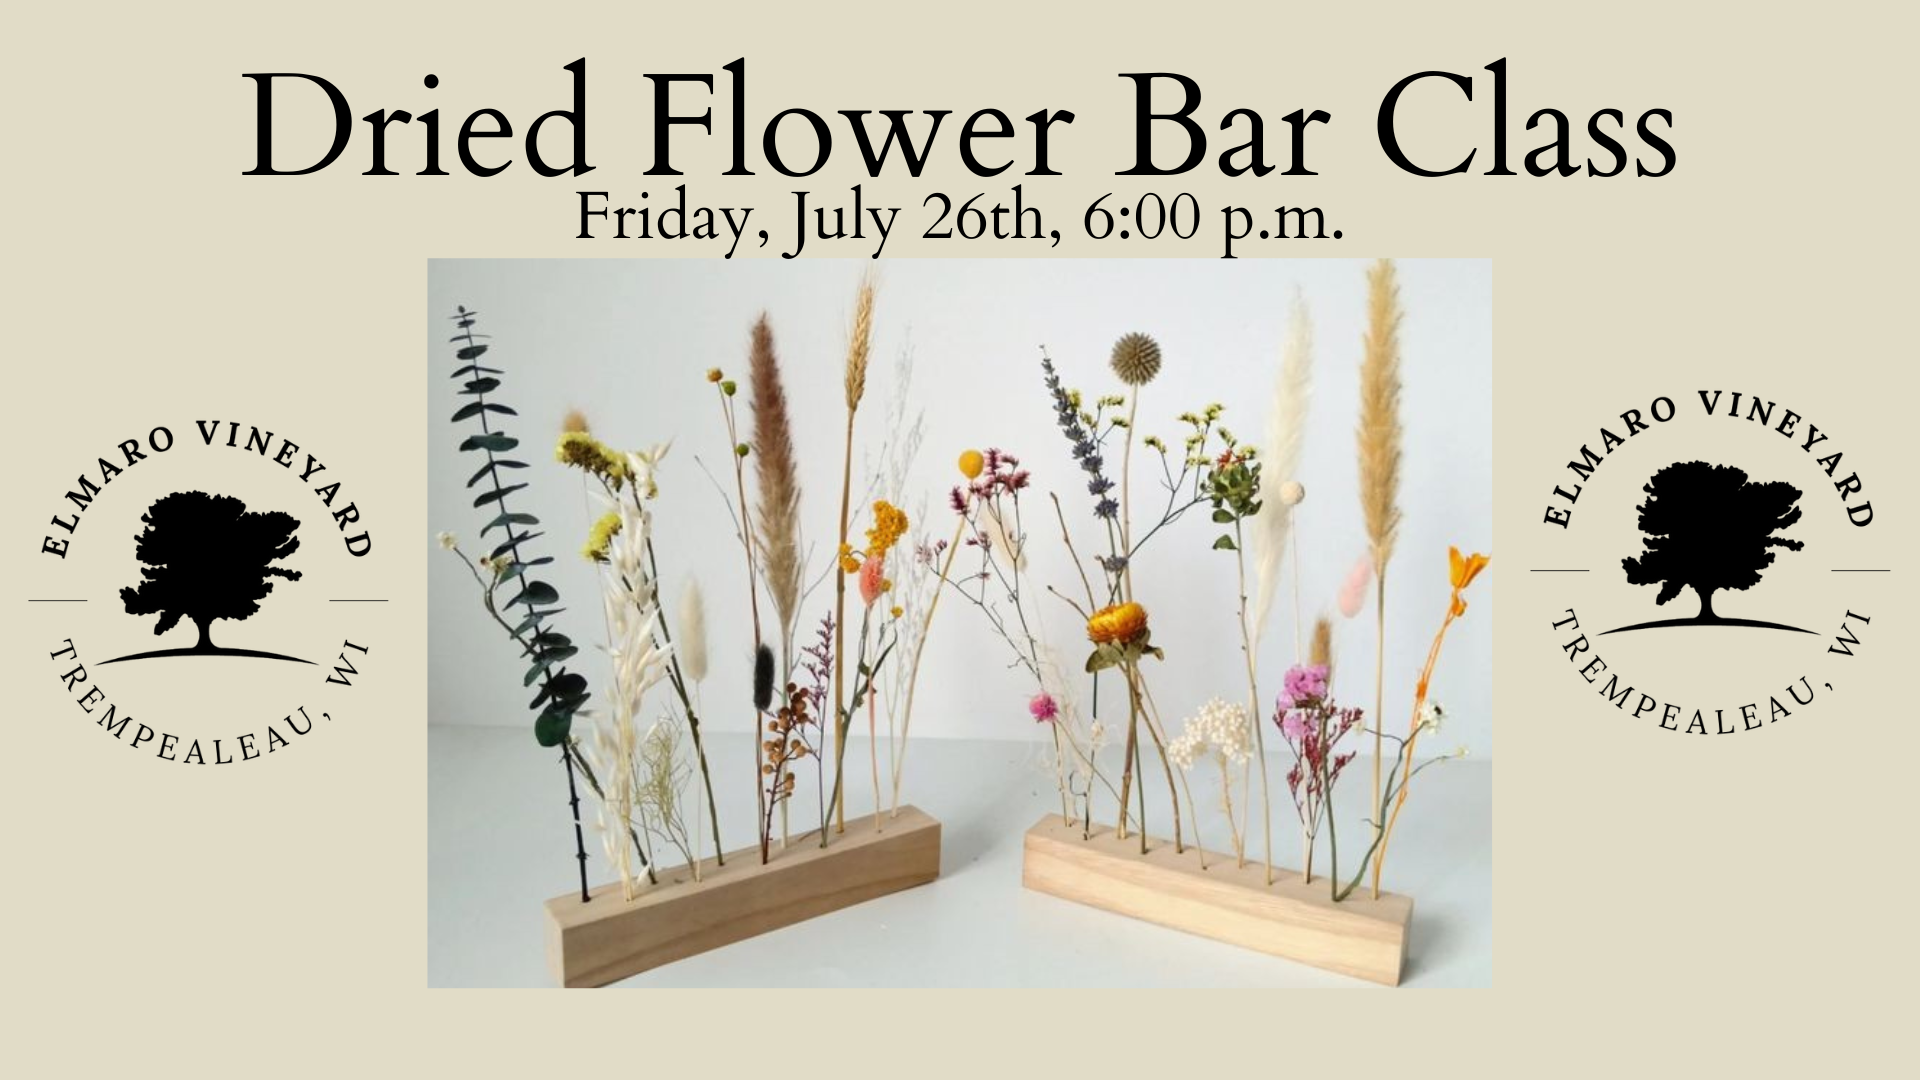 Dried flower bar class at Elmaro Vineyard.